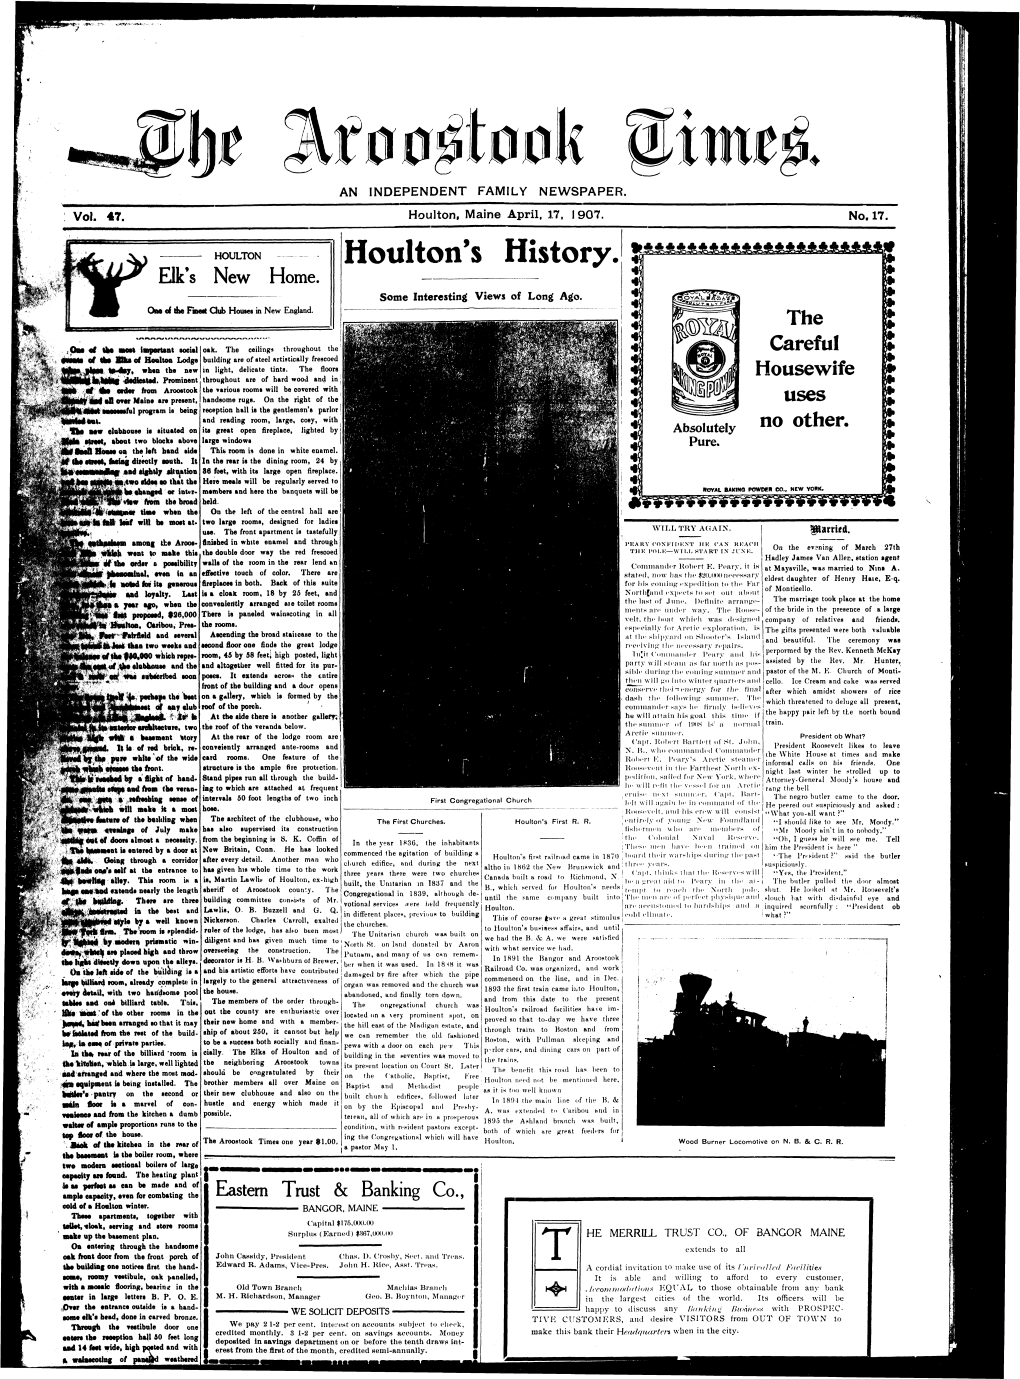 The Aroostook Times, April 17, 1907